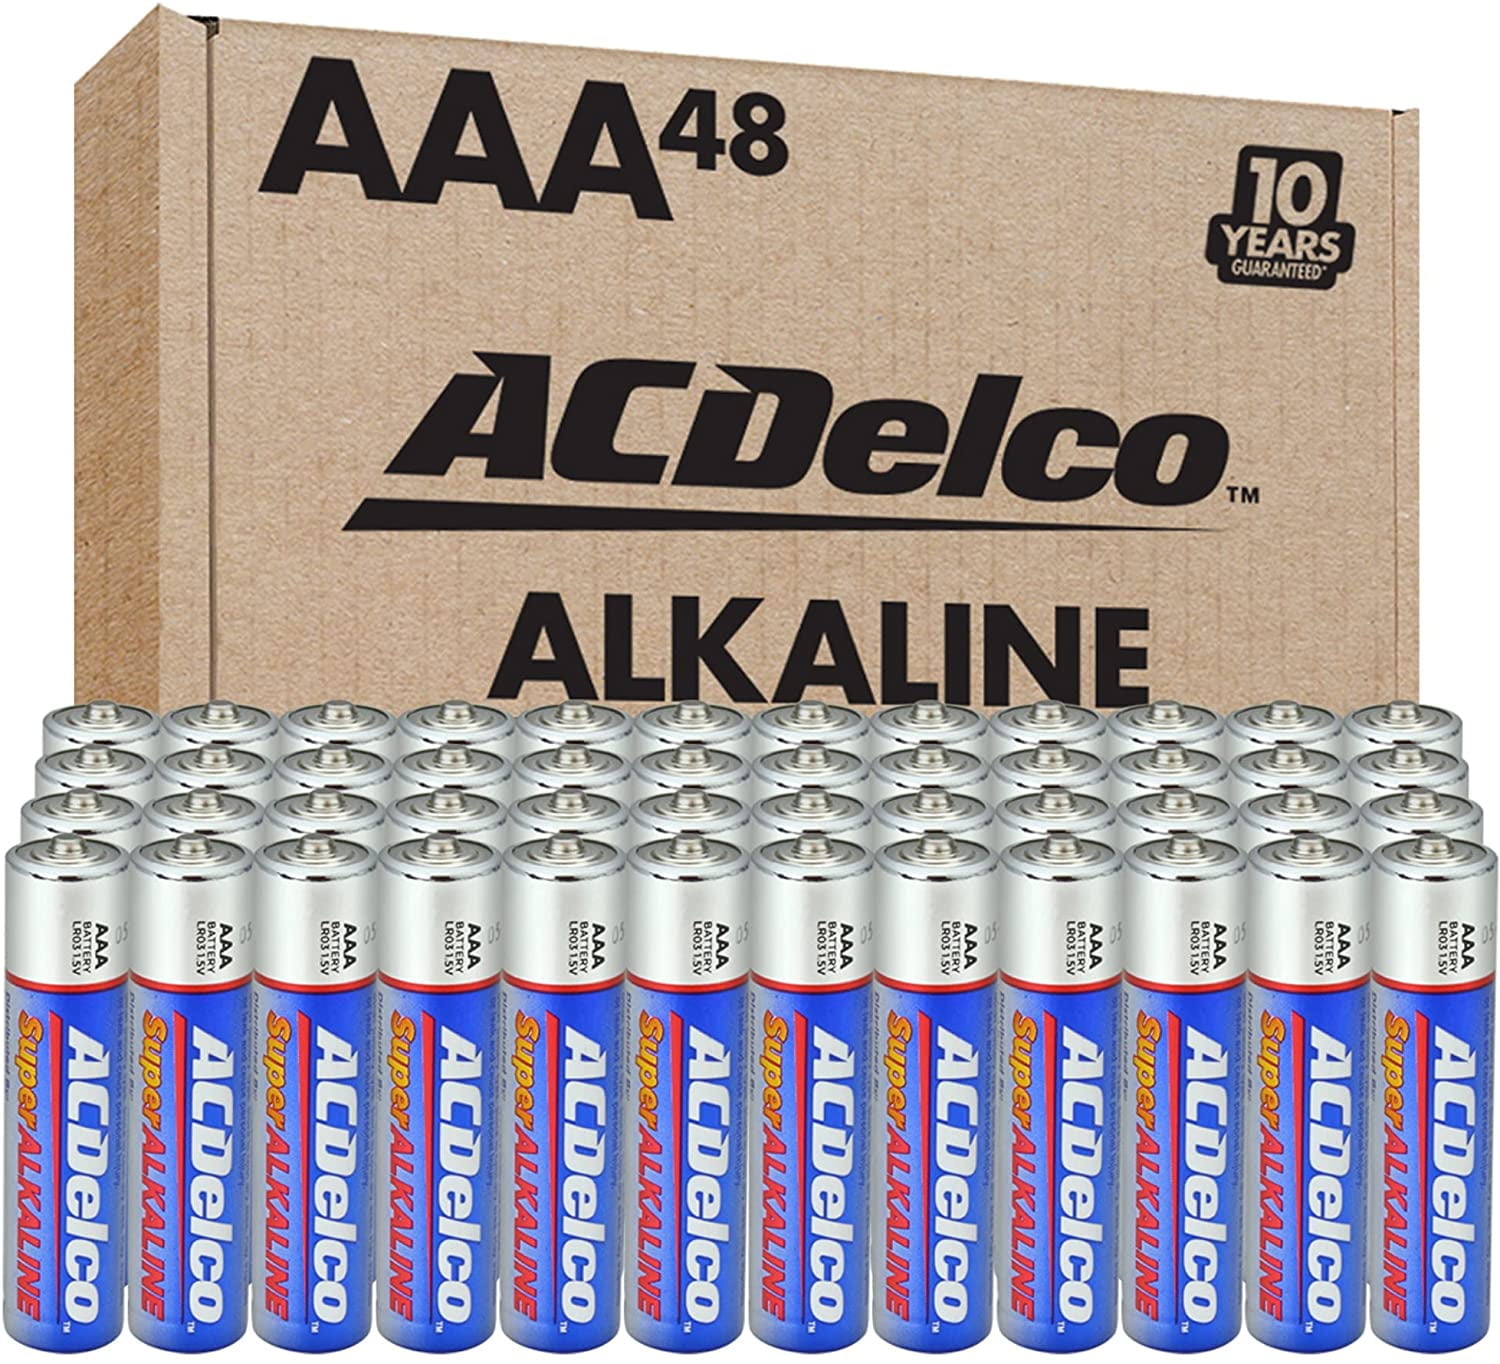 Basics AAA Performance Alkaline Batteries - Pack of 36